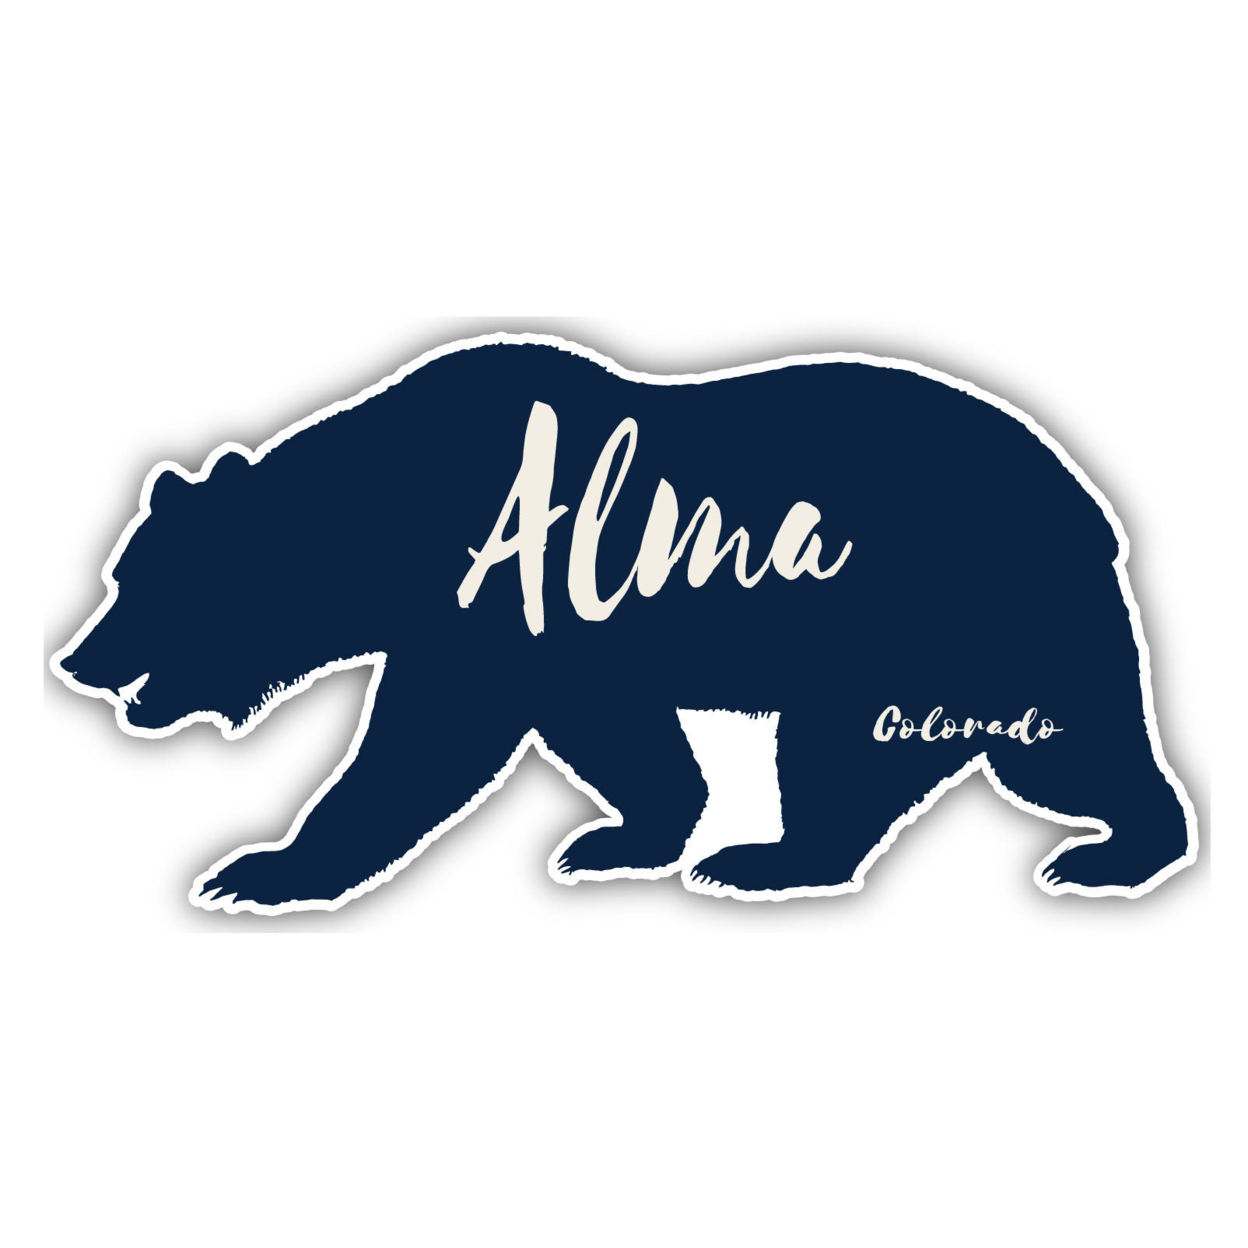 Alma Colorado Souvenir Decorative Stickers (Choose Theme And Size) - 4-Pack, 10-Inch, Adventures Awaits